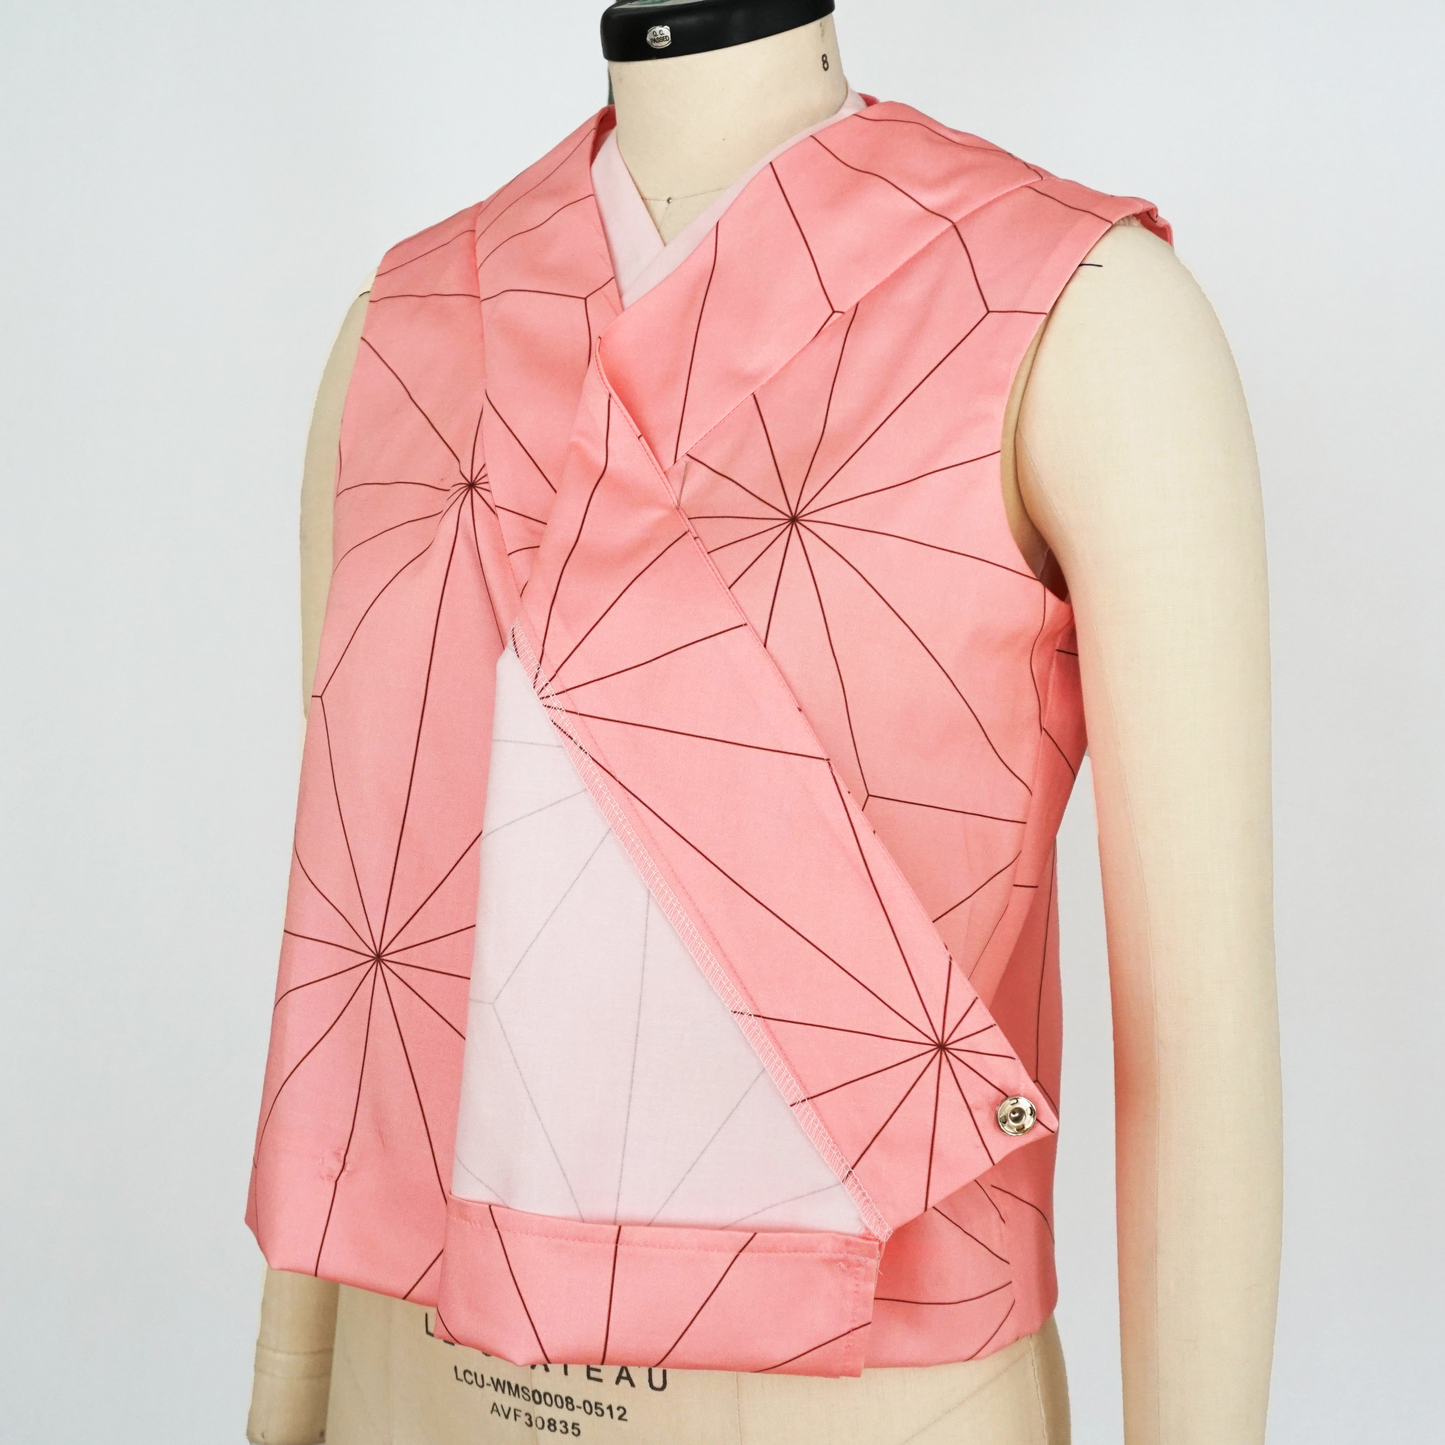 Kimono Shirt and Wrap Skirt Cosplay Sewing Pattern/Downloadable PDF File